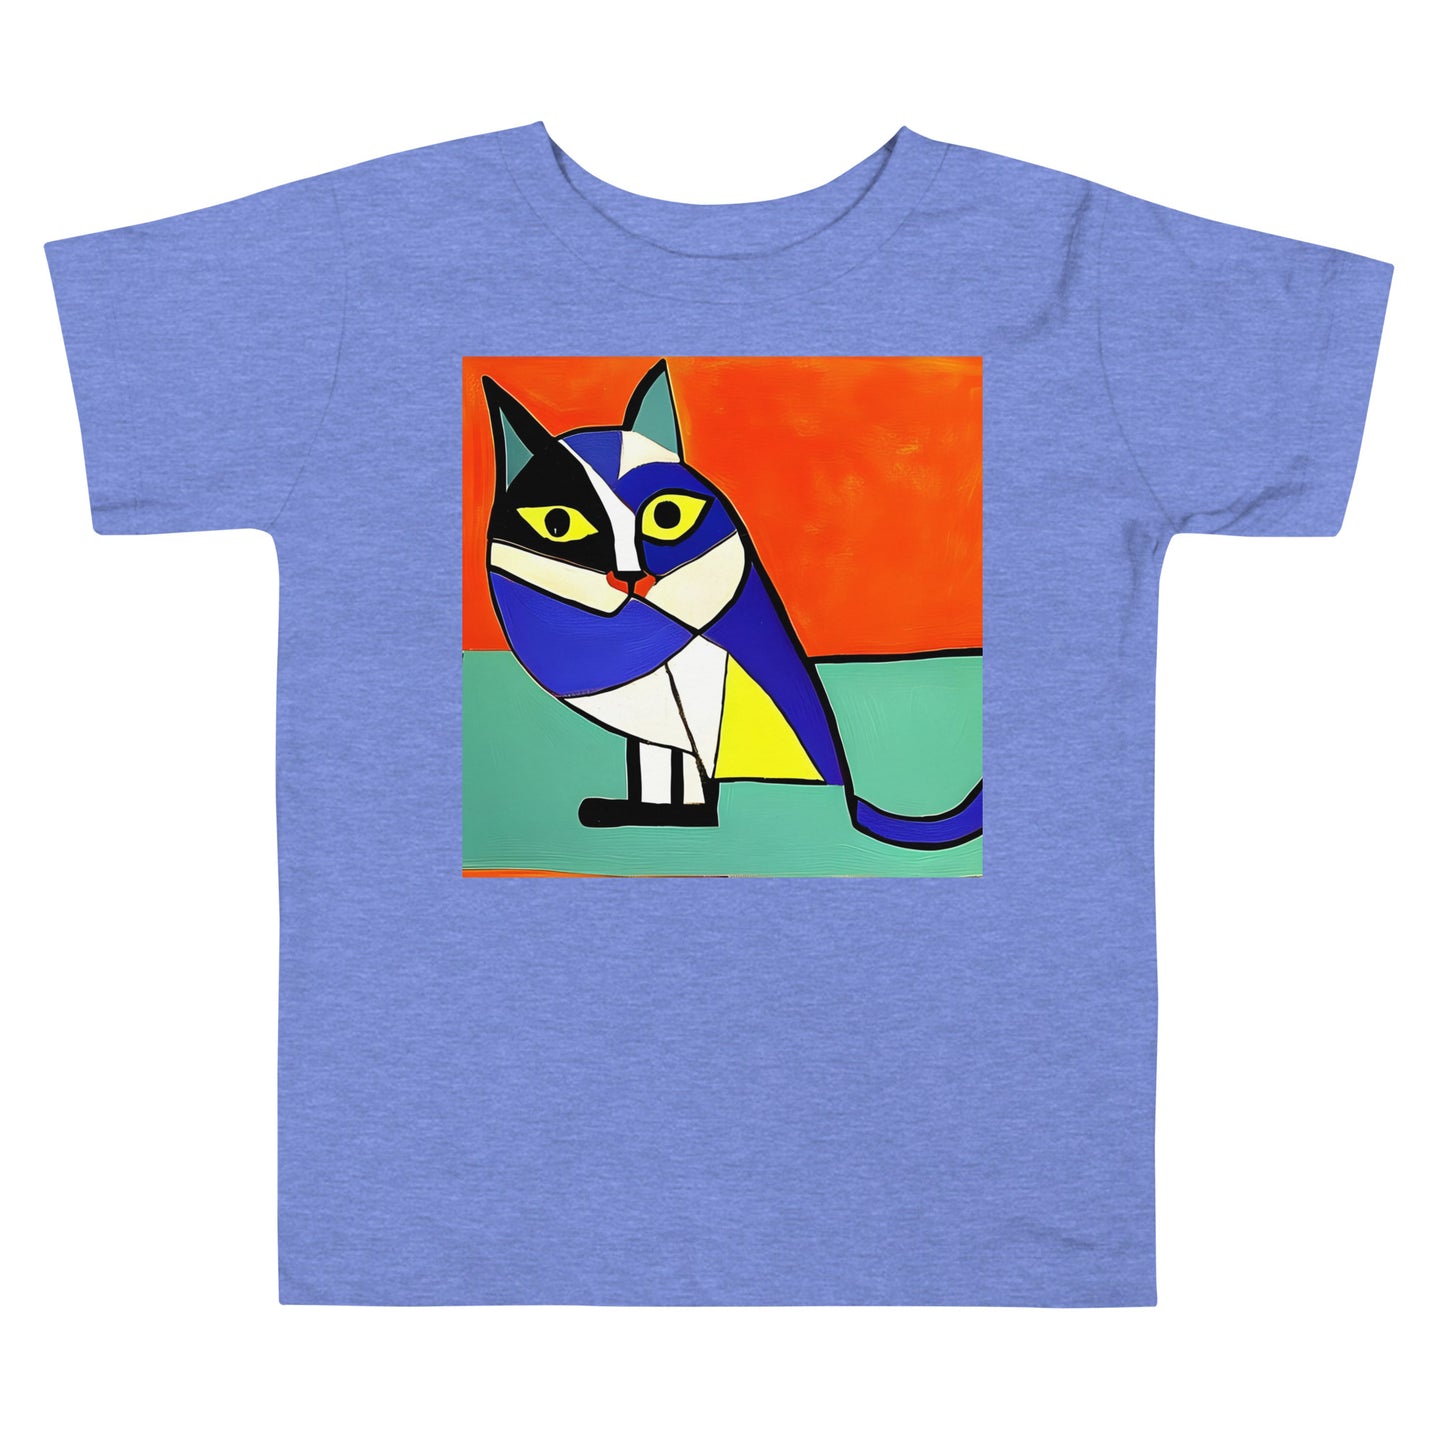 Purrfect Toddler's T-Shirt - 011